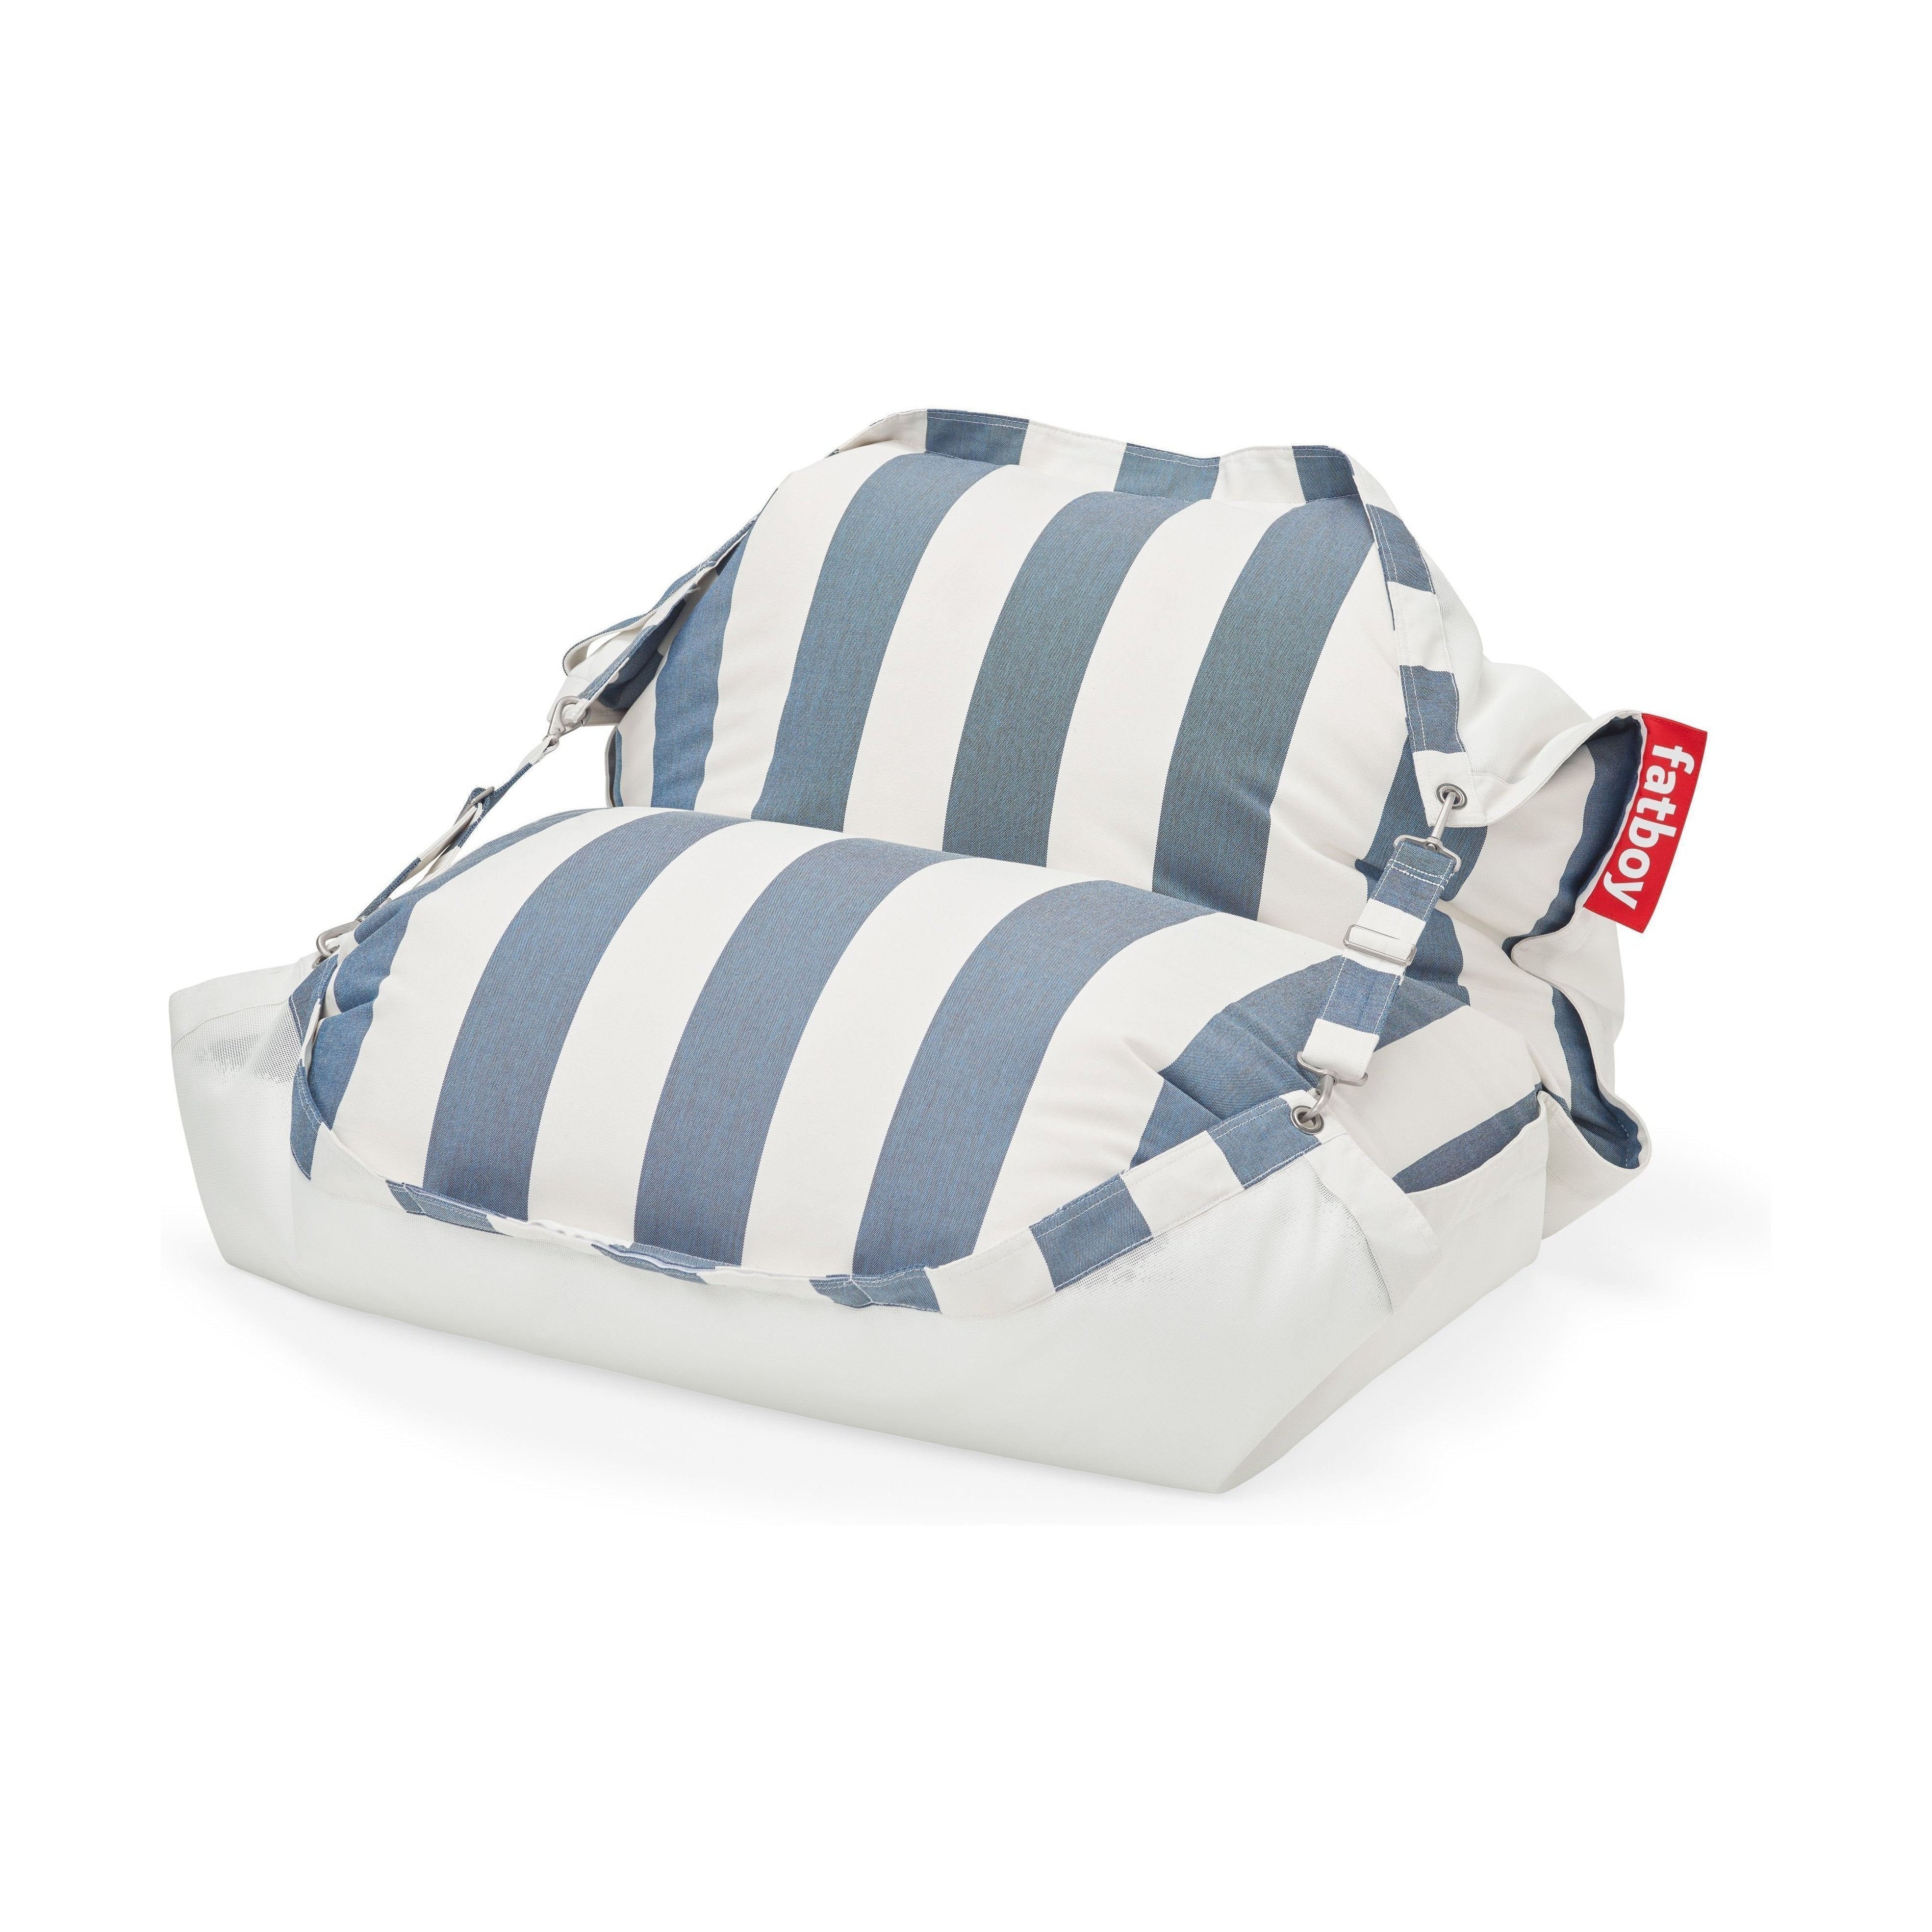 Fatboy Original floatzac flytande beanbag, stripe oceanblått